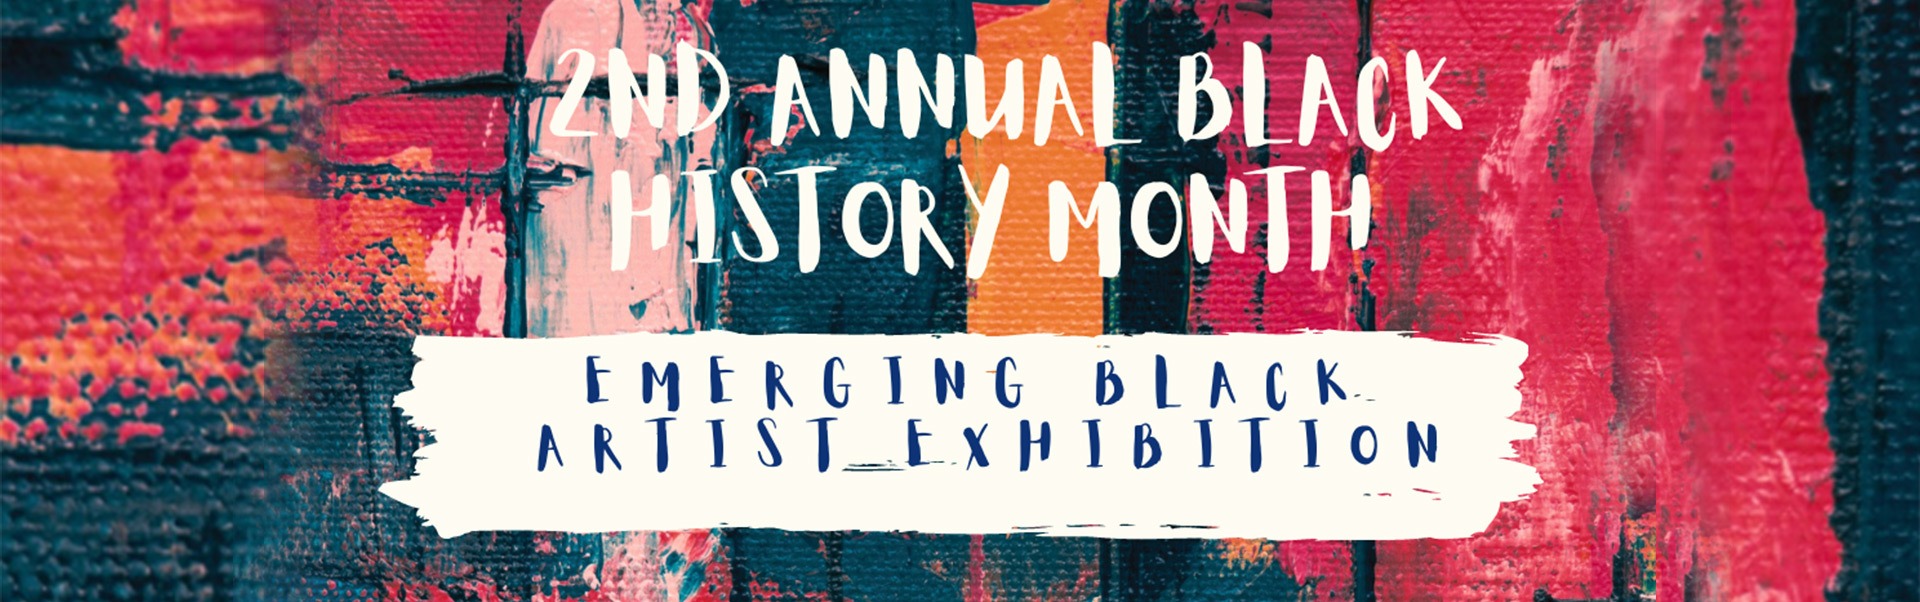 Black History Month Artist Exhibition